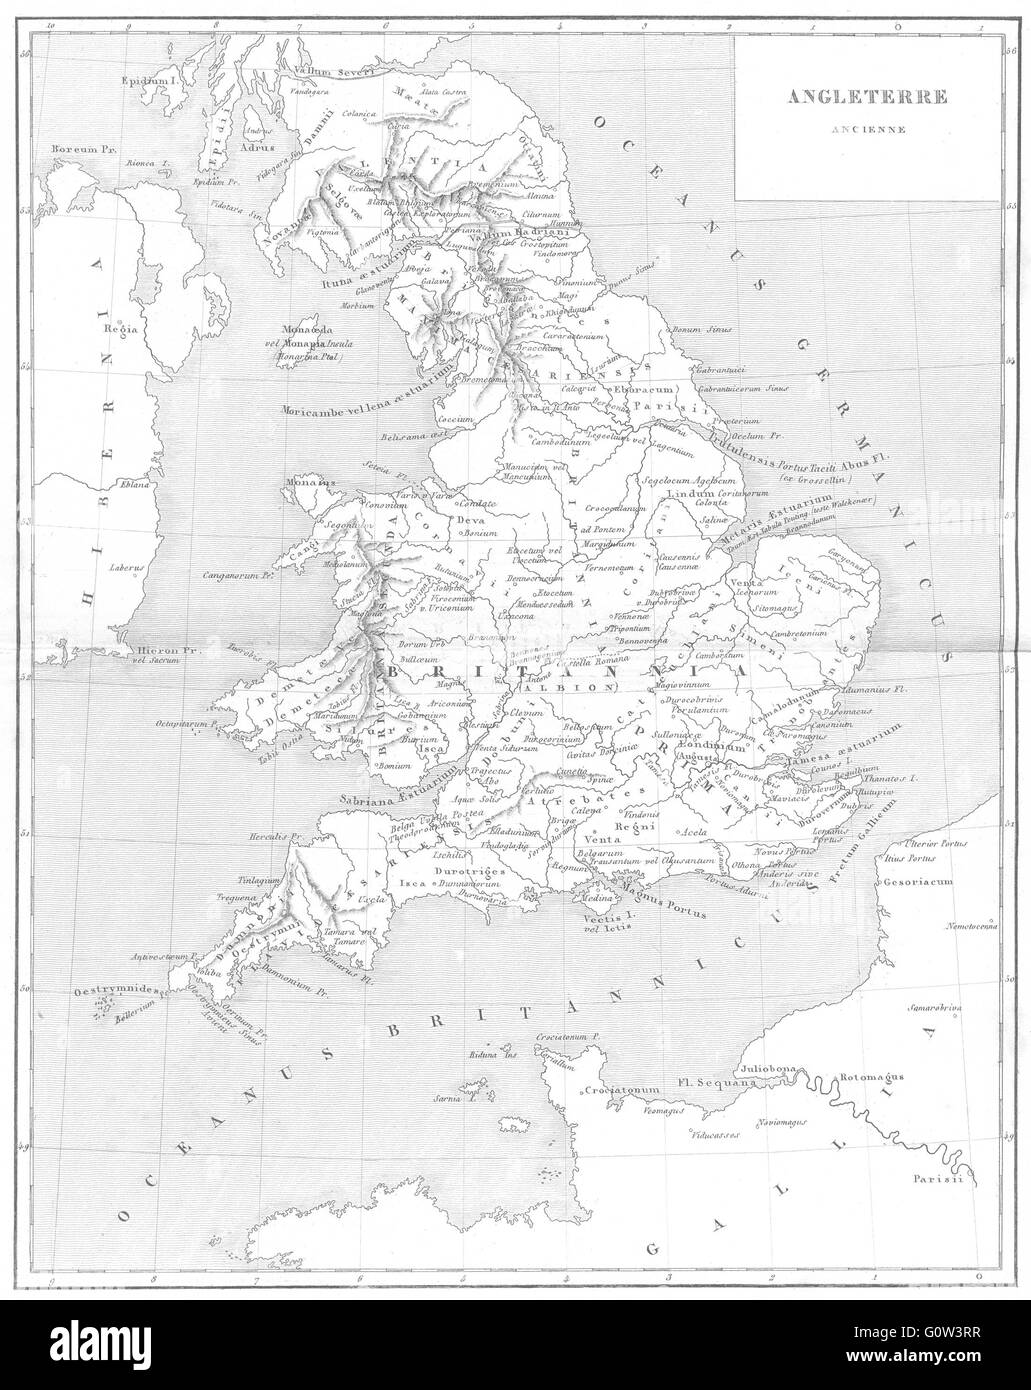 ENGLAND: Angleterre, Ancienne Ancient Britain Britannia, 1879 antique map Stock Photo